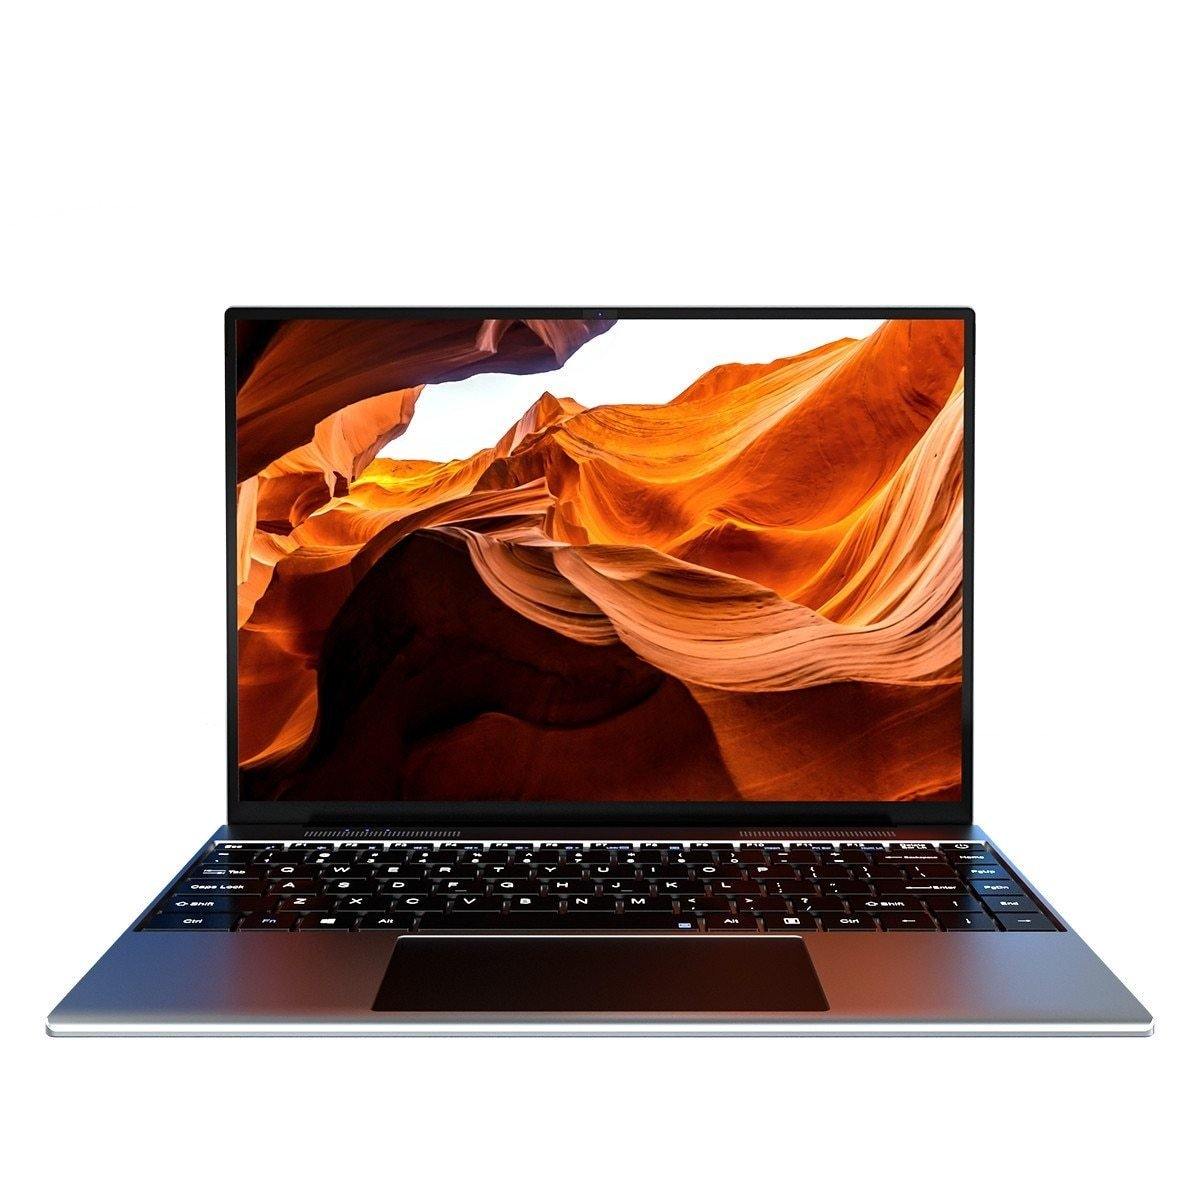 13.5" KUU YoBook Metal Laptop with 3K IPS Display, Intel Pentium J3710, 4GB RAM, 128GB SSD, Windows 10, WiFi, and Type-C Connectivity - CALCUMART